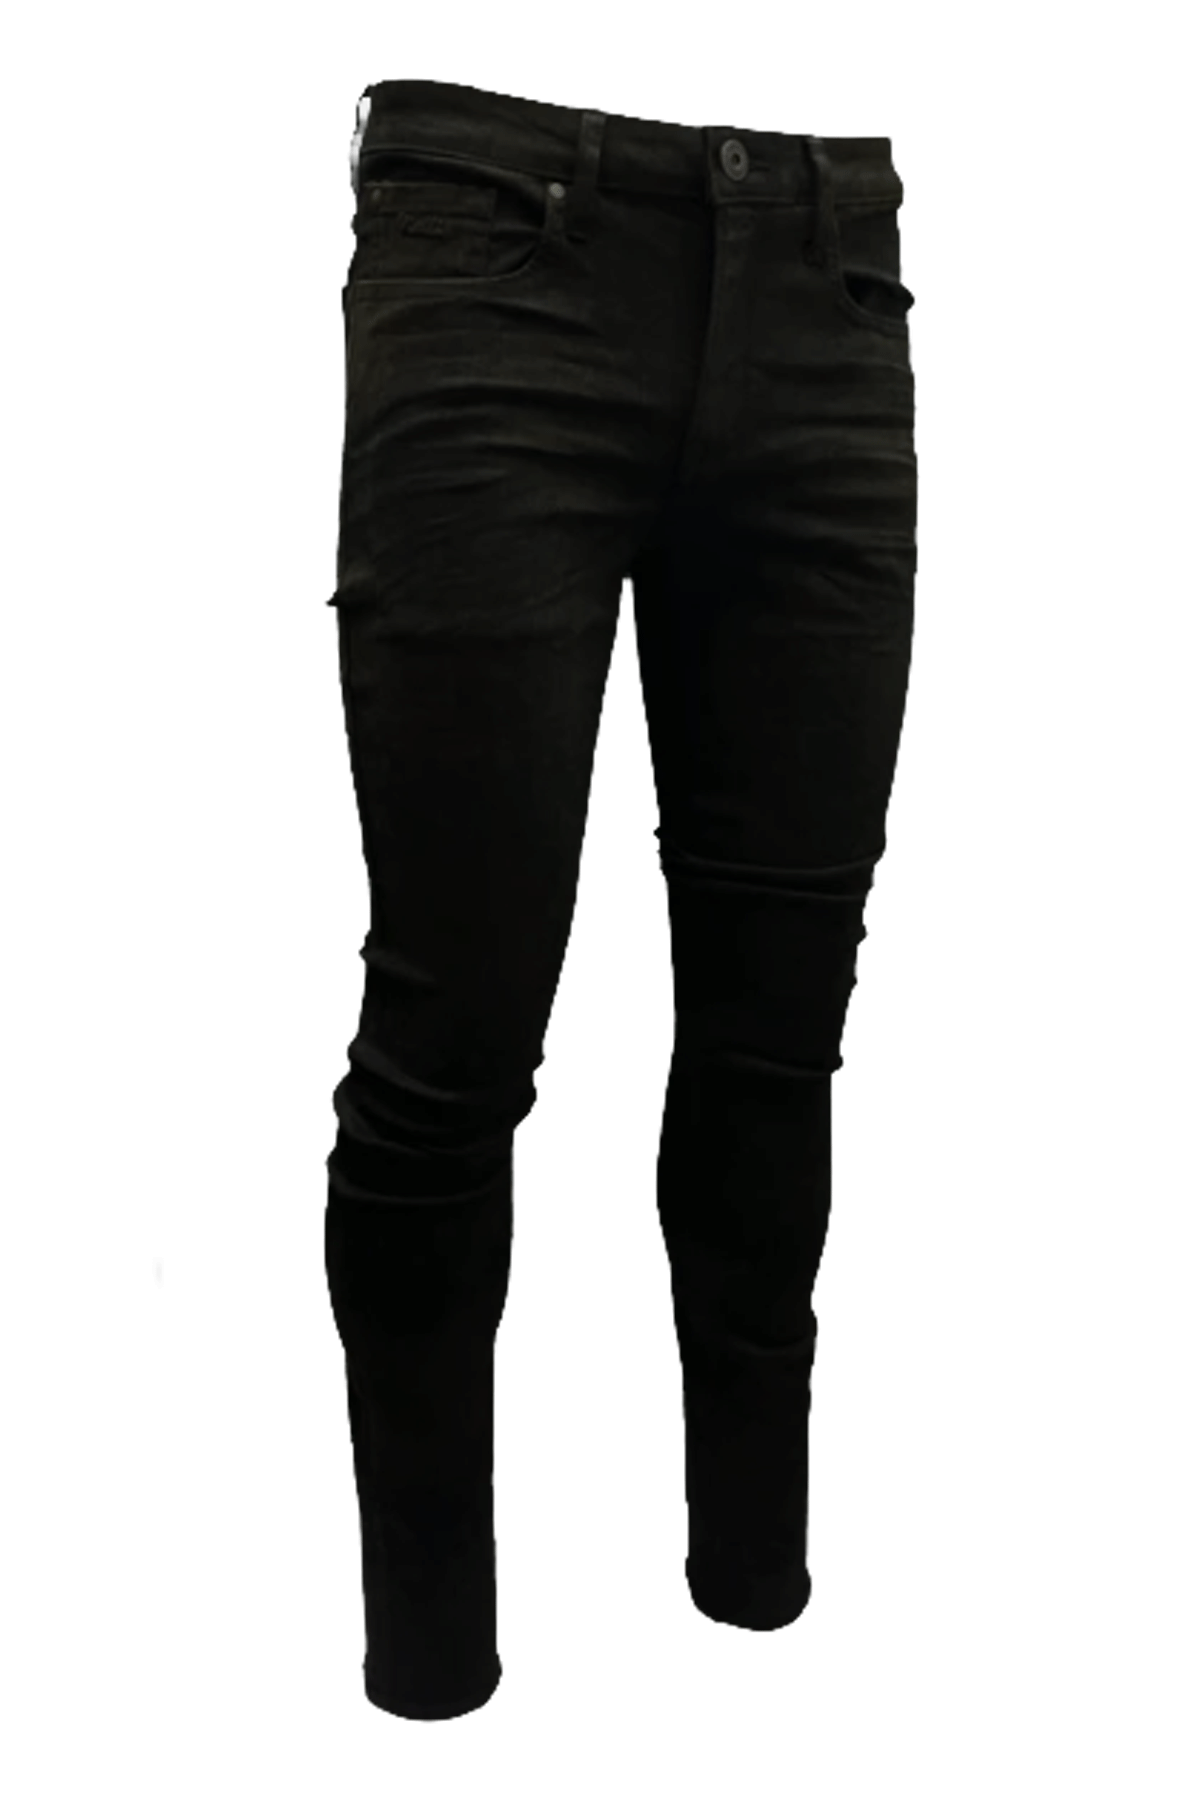 Vialli Black Aberto Skinny Jeans